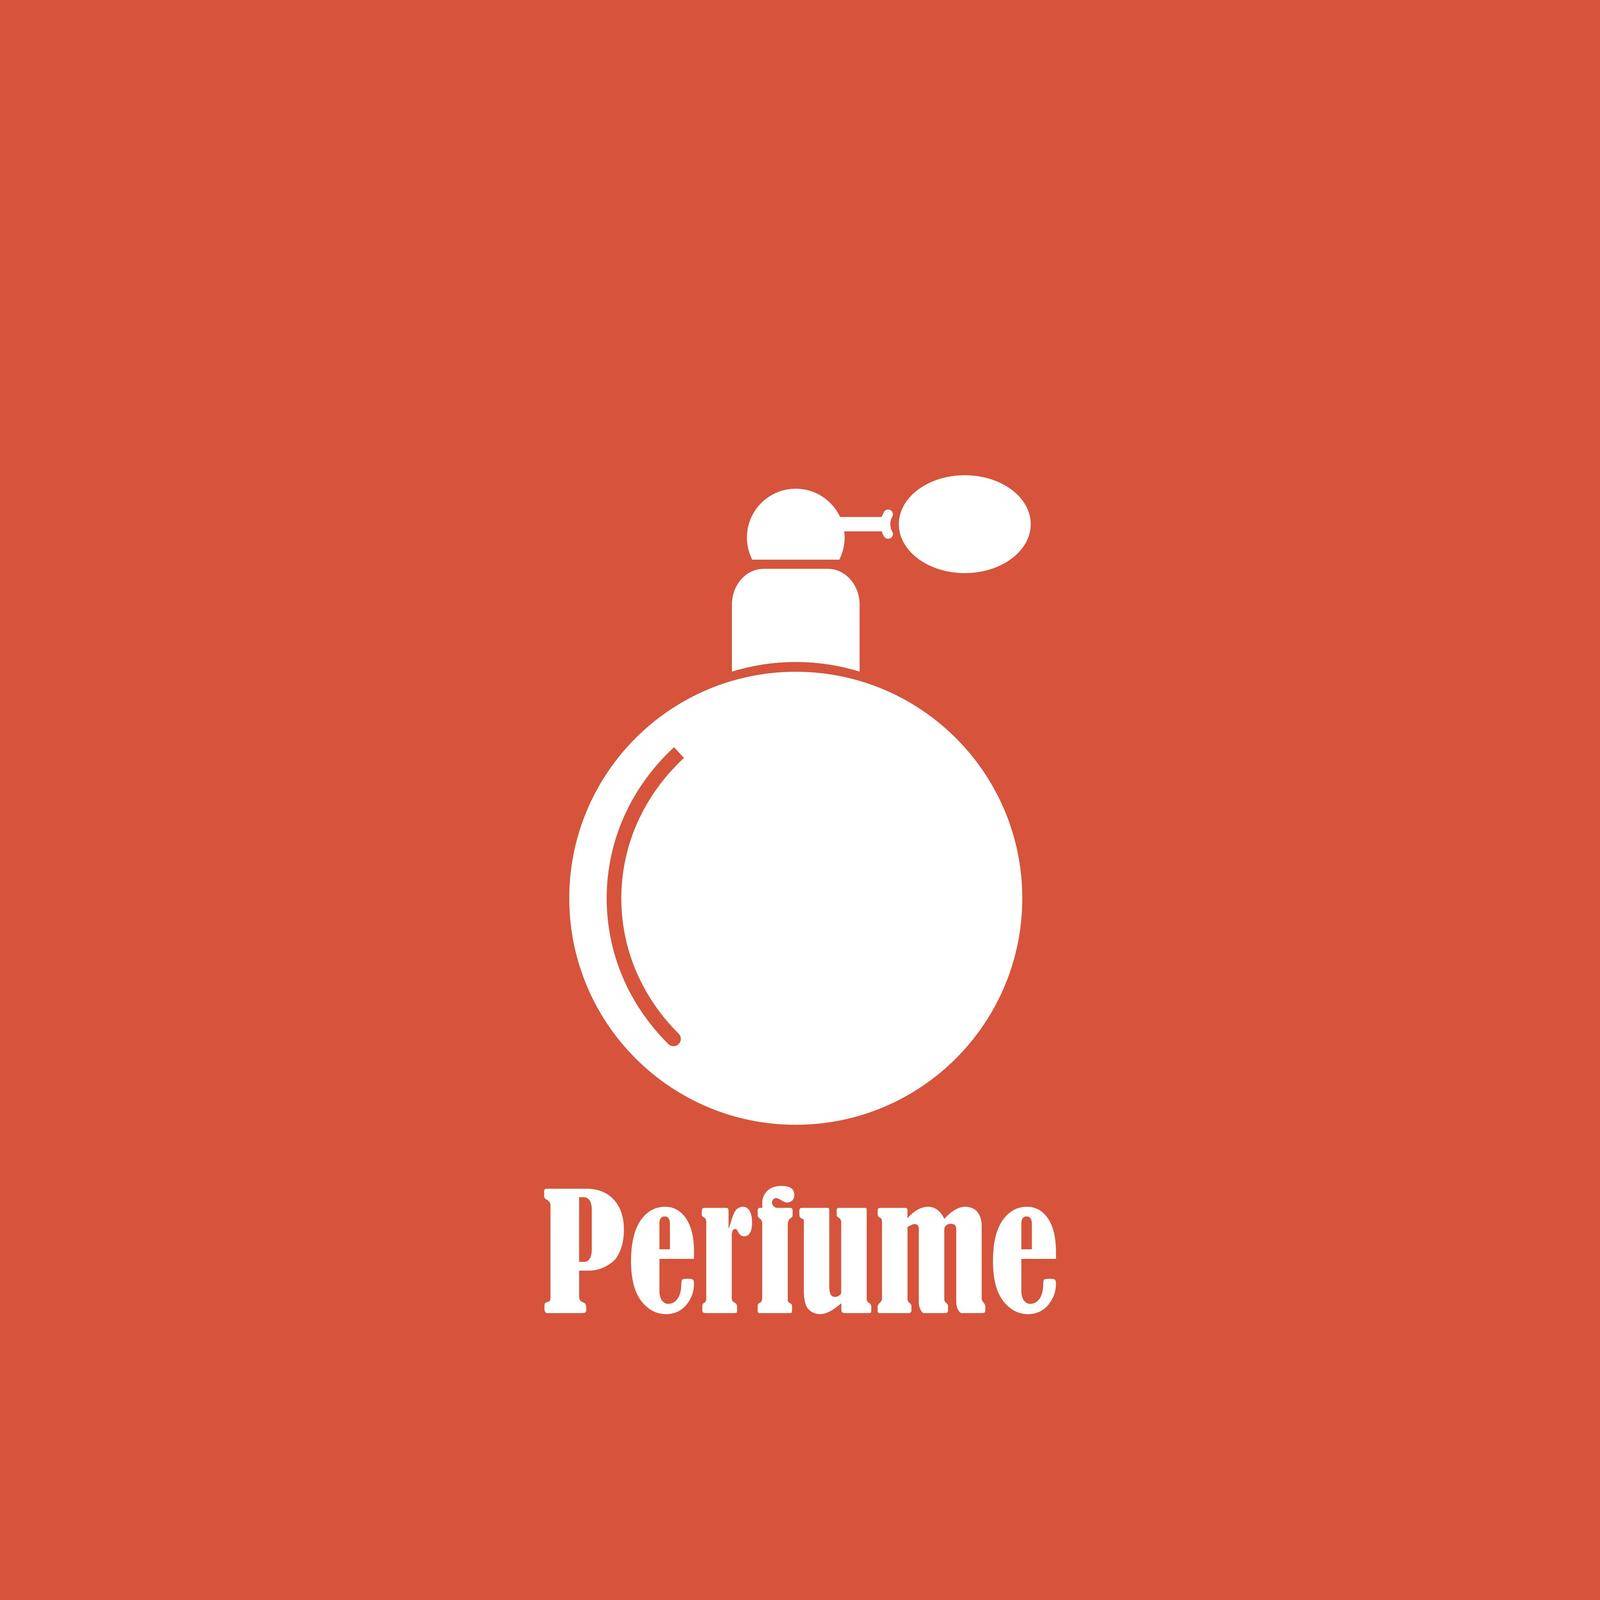 perfume logo.vector illustration symbol design